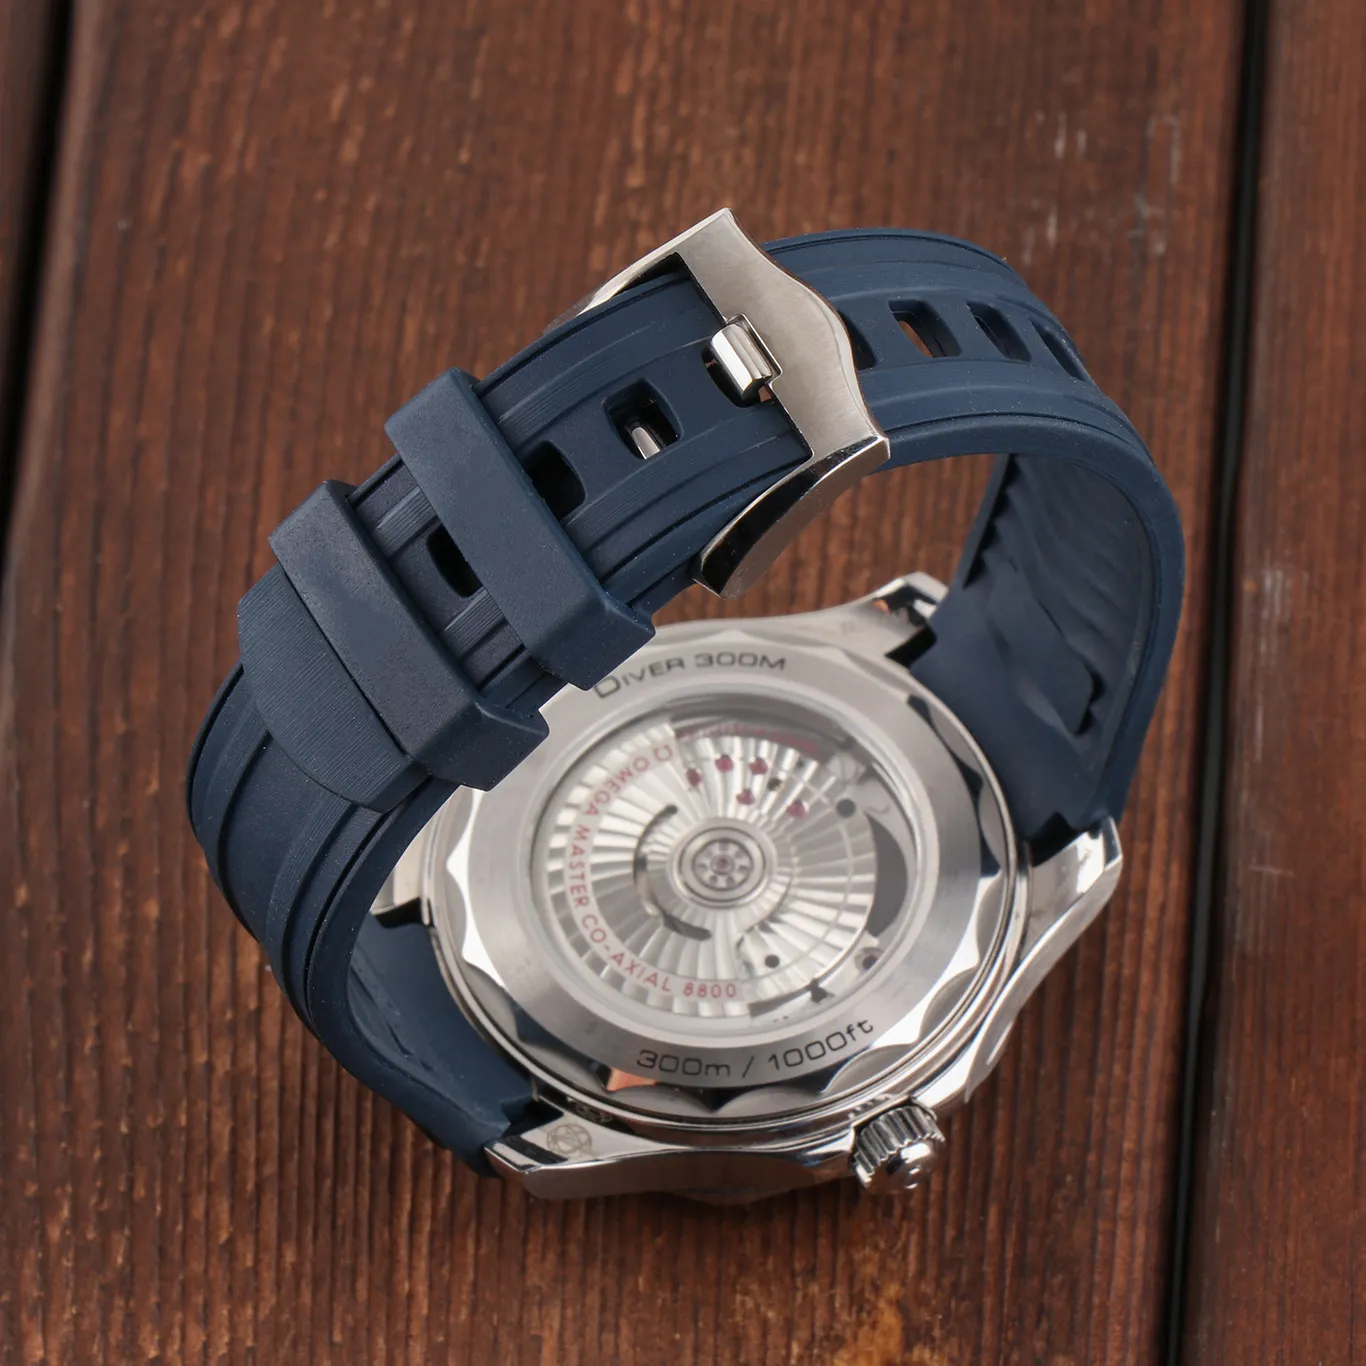 Extremidade curvada 20mm pulseira de relógio homem azul preto à prova dwaterproof água silicone borracha pulseiras pulseira fecho fivela para omega sea master 227r